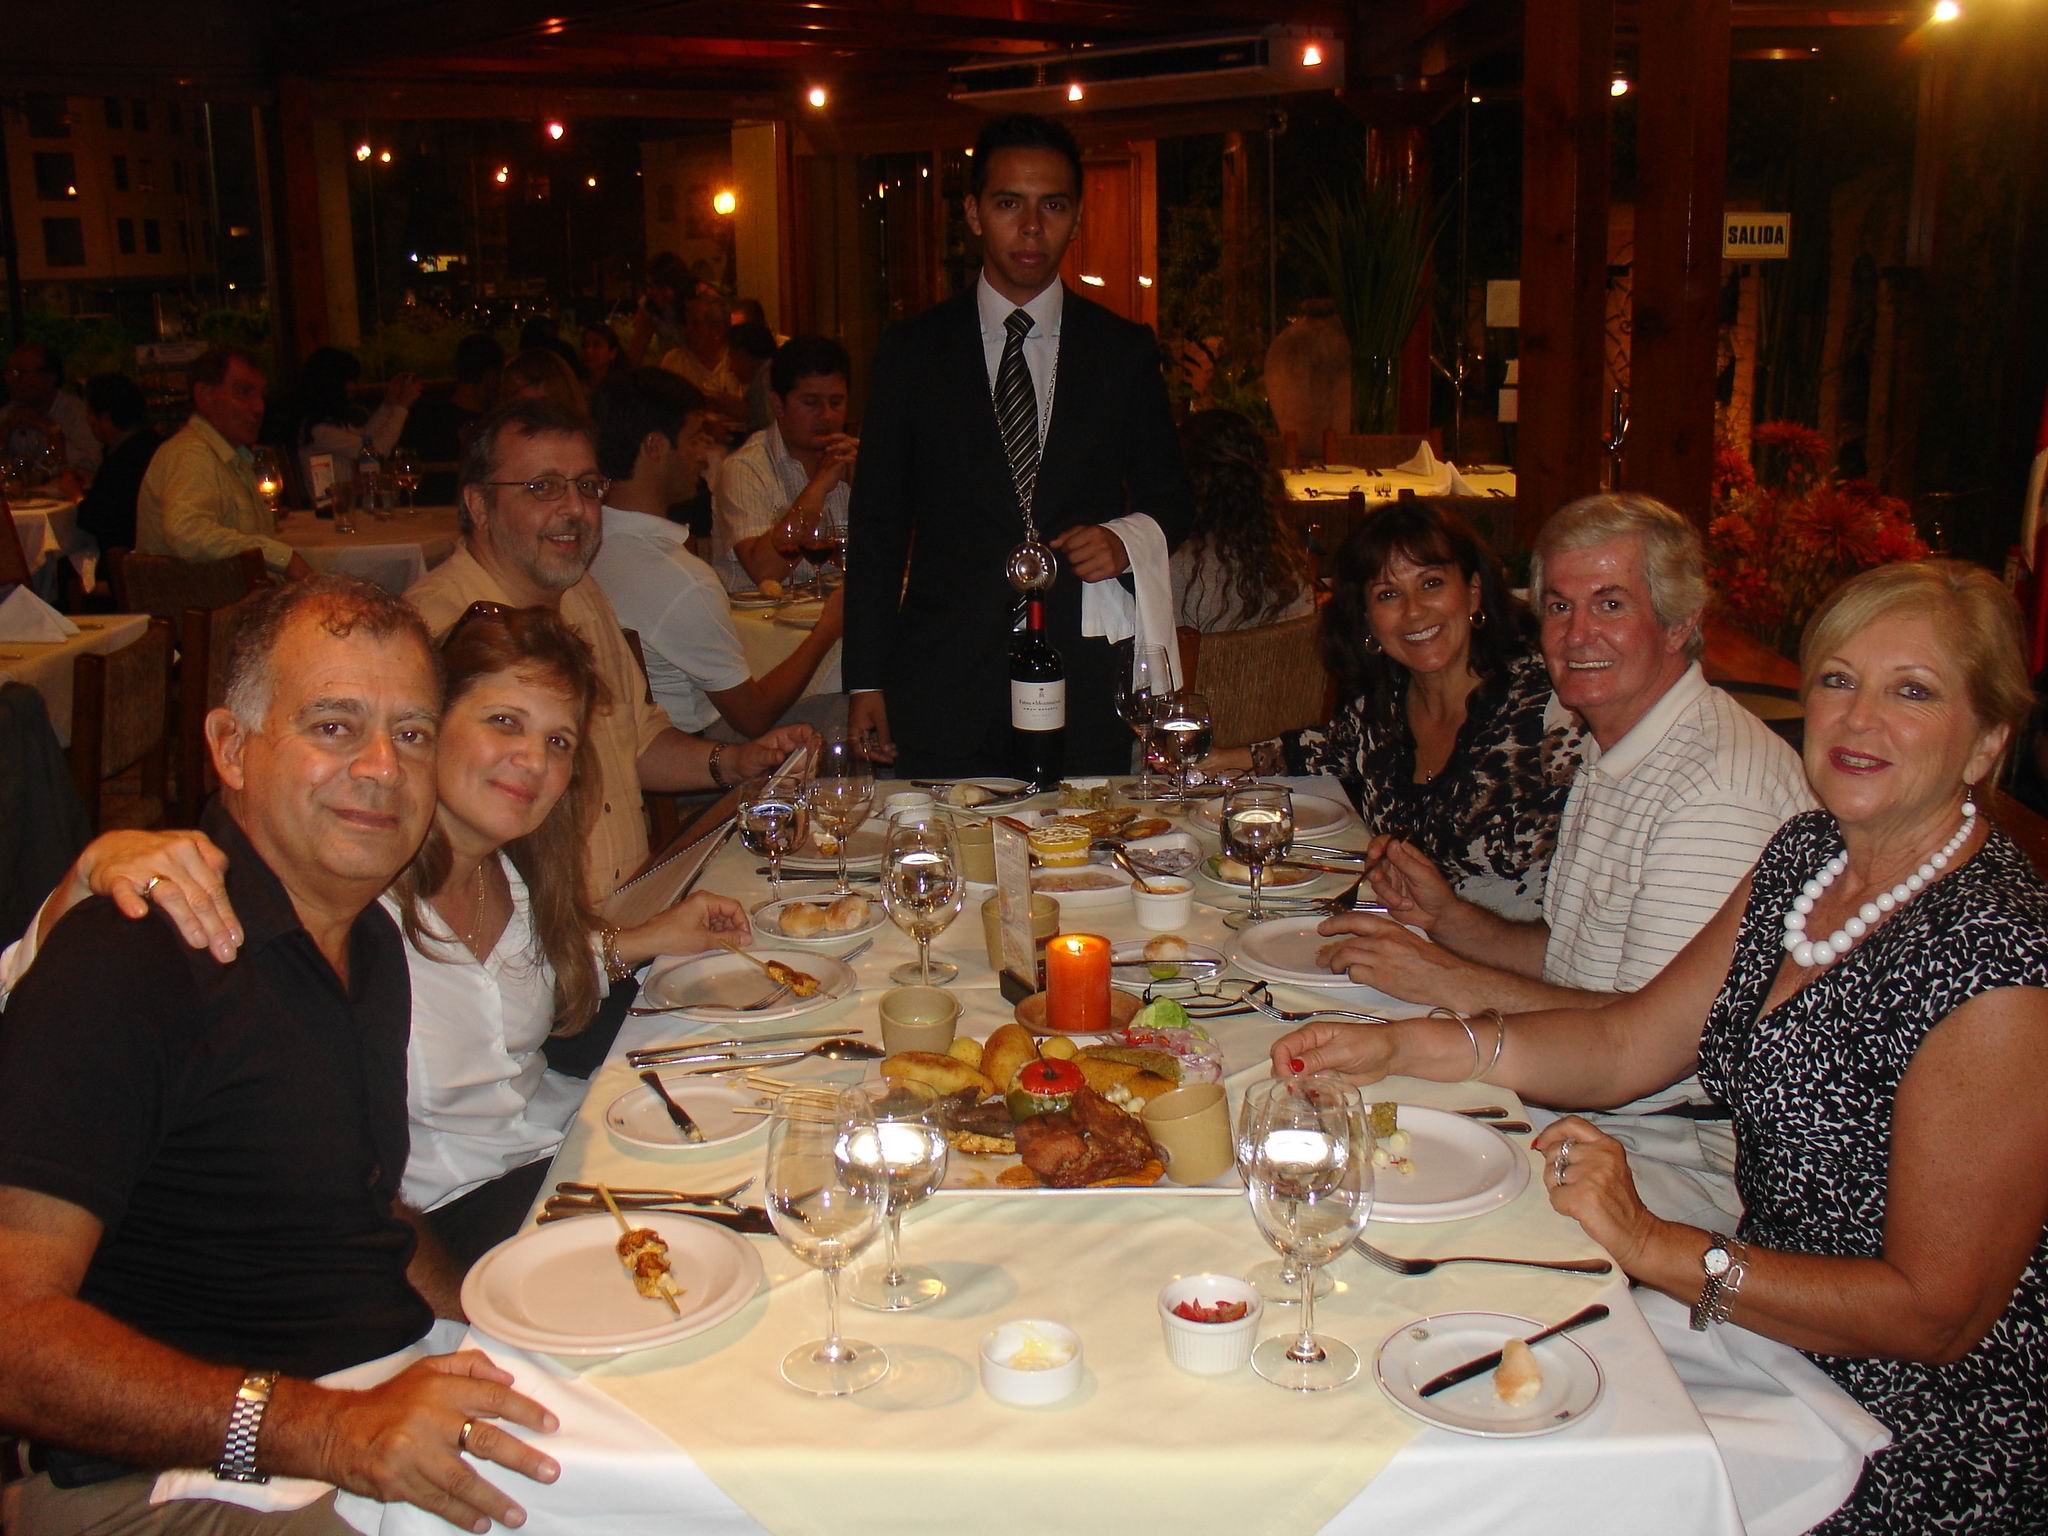 Lima-Fernando, Rosa, Bill, Me, Carlos & Gringa